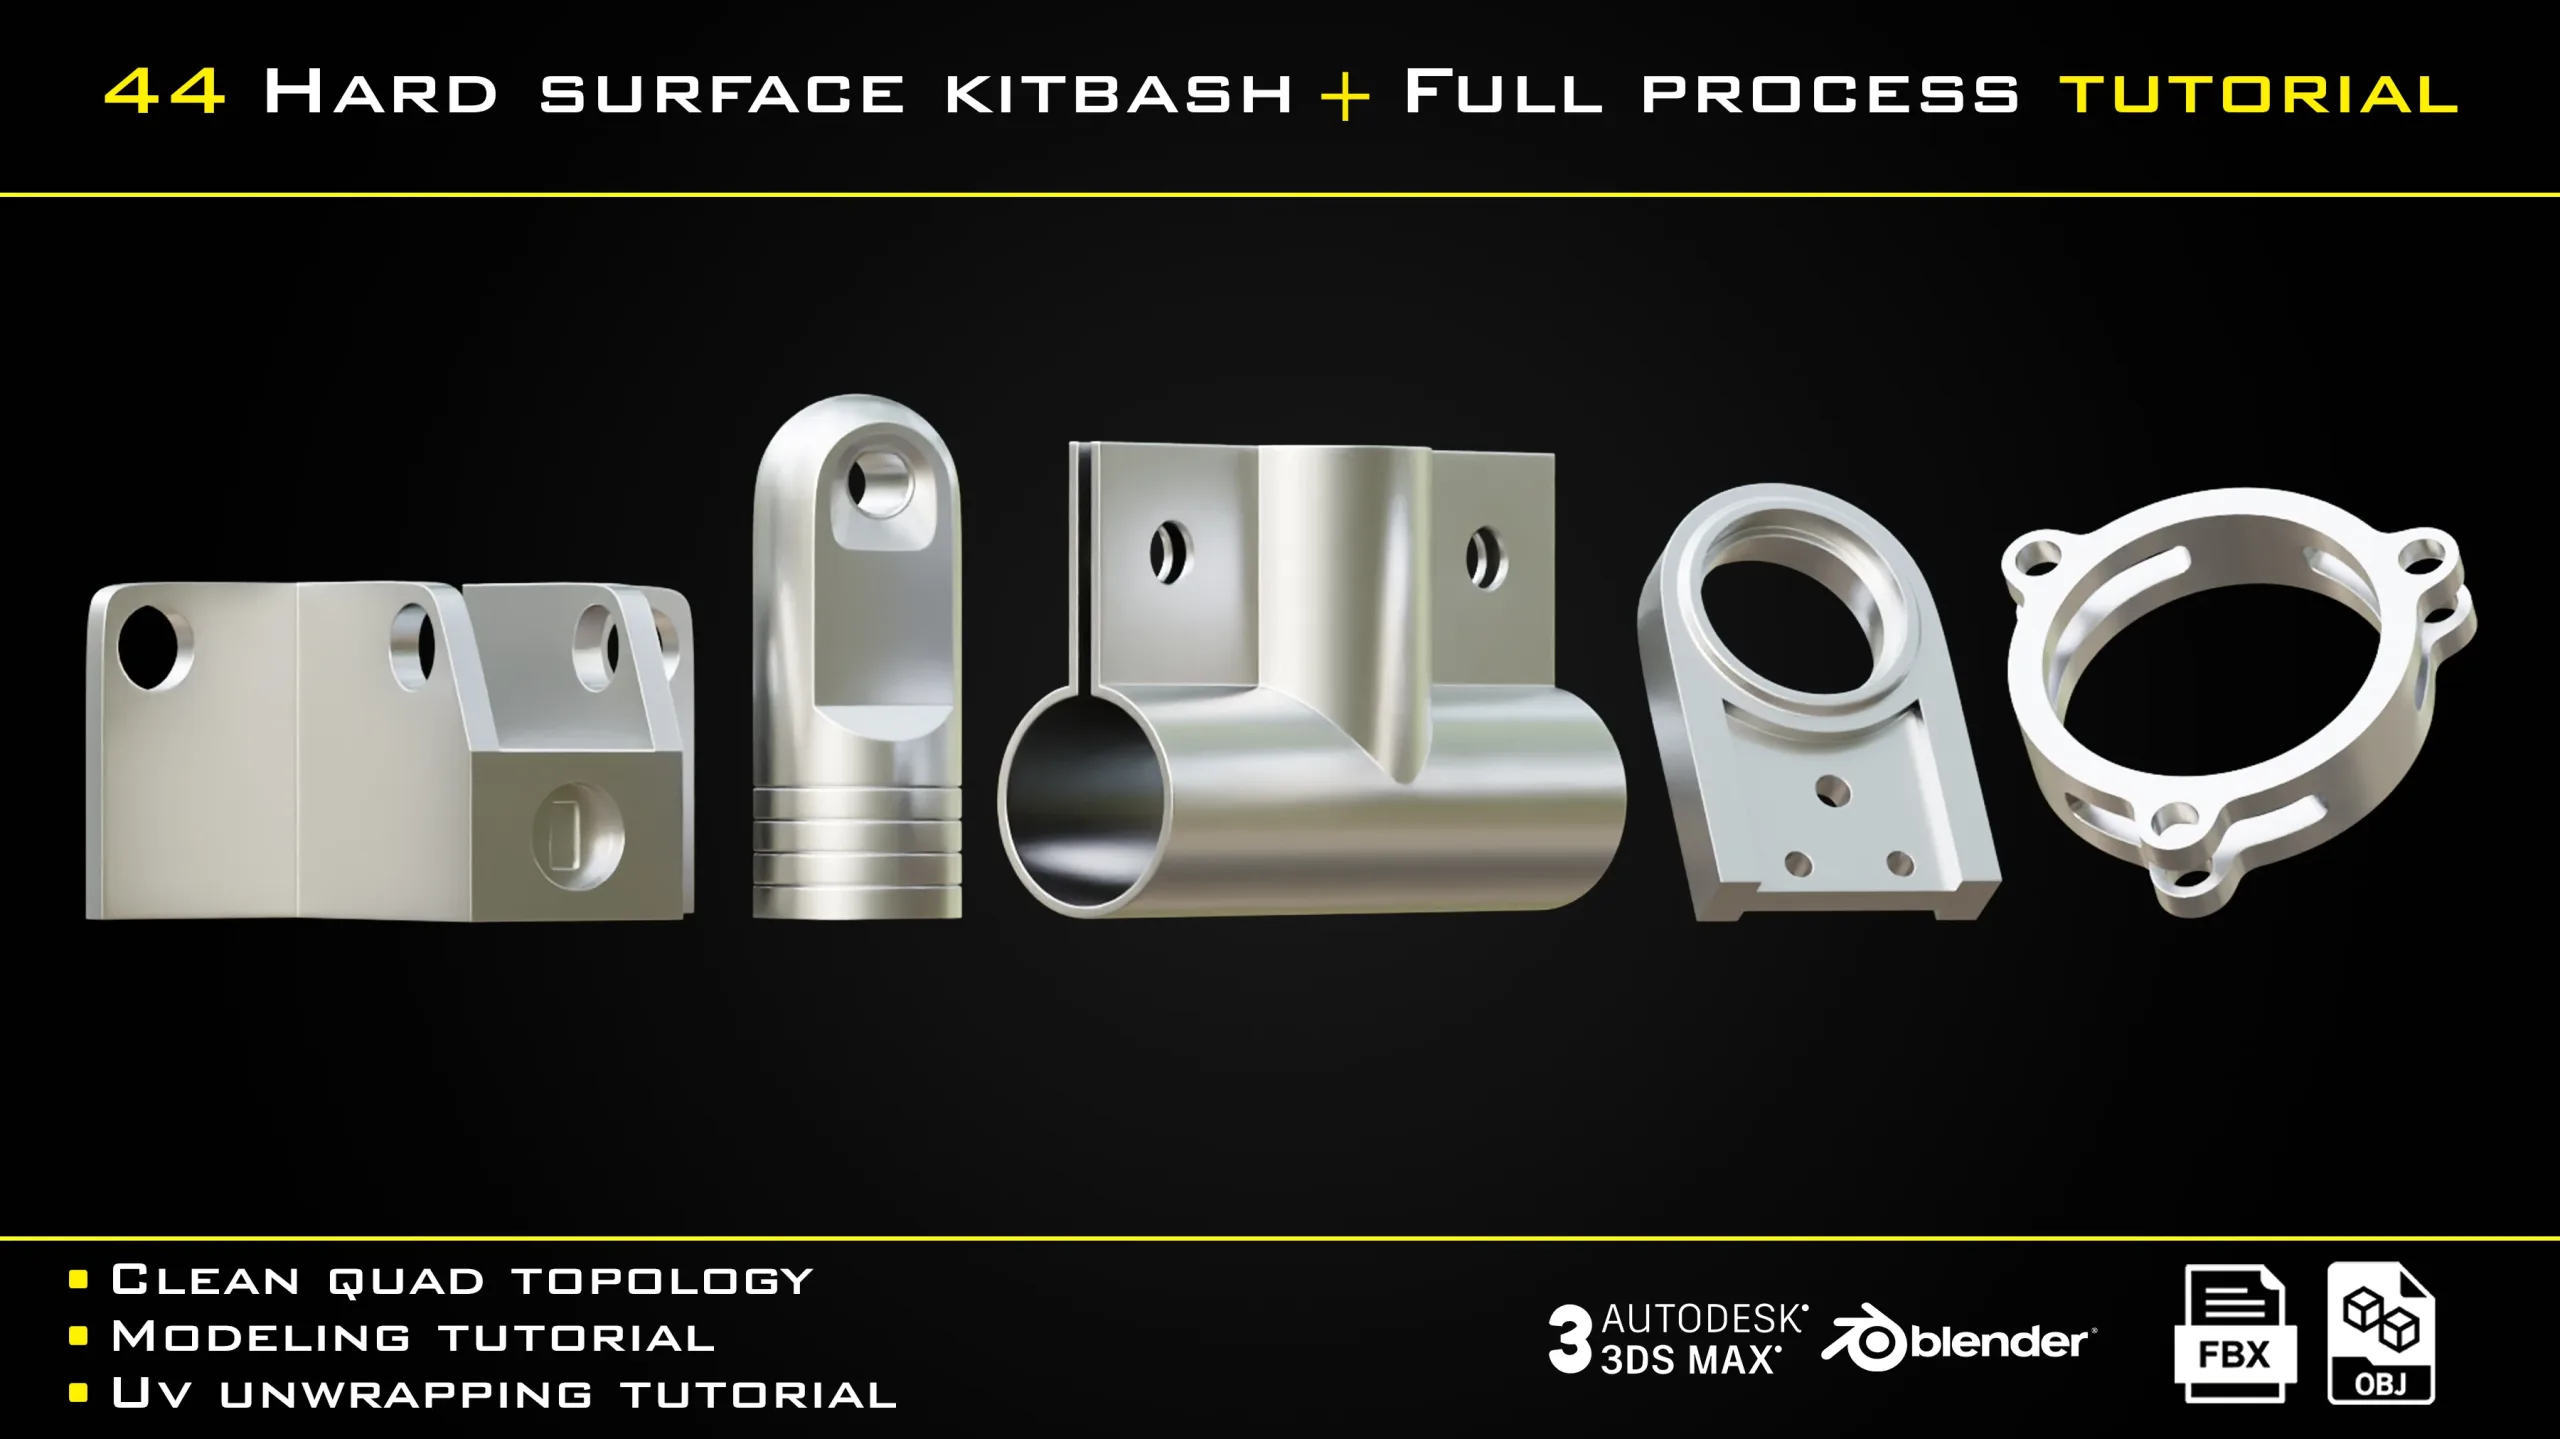 44 Hard surface kitbash + Full Process Tutorial